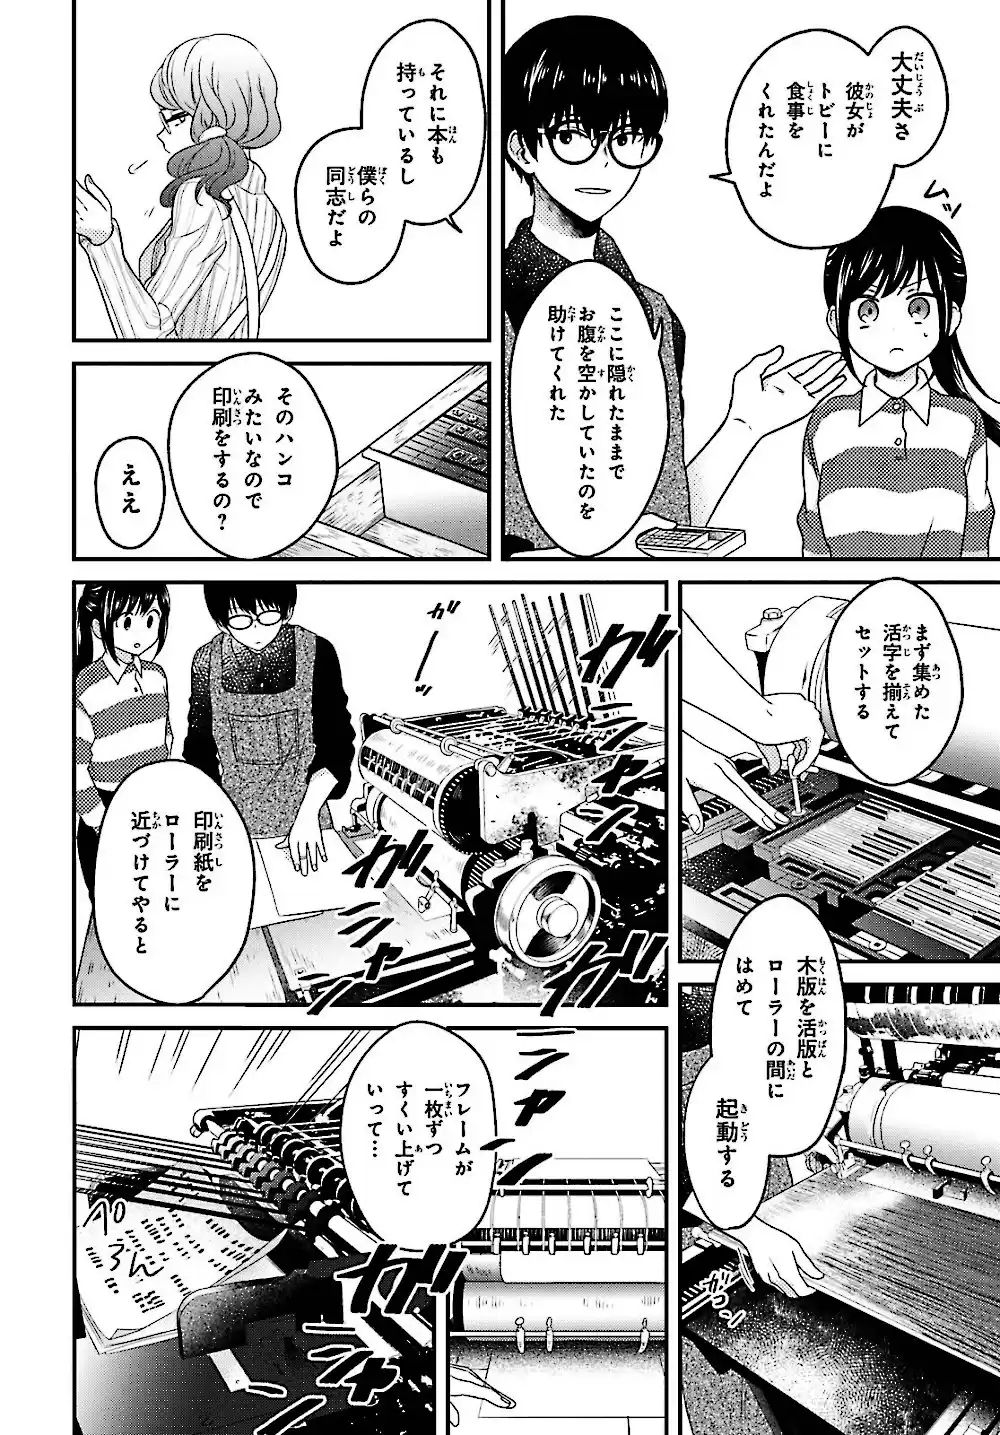 9 Manga E6is